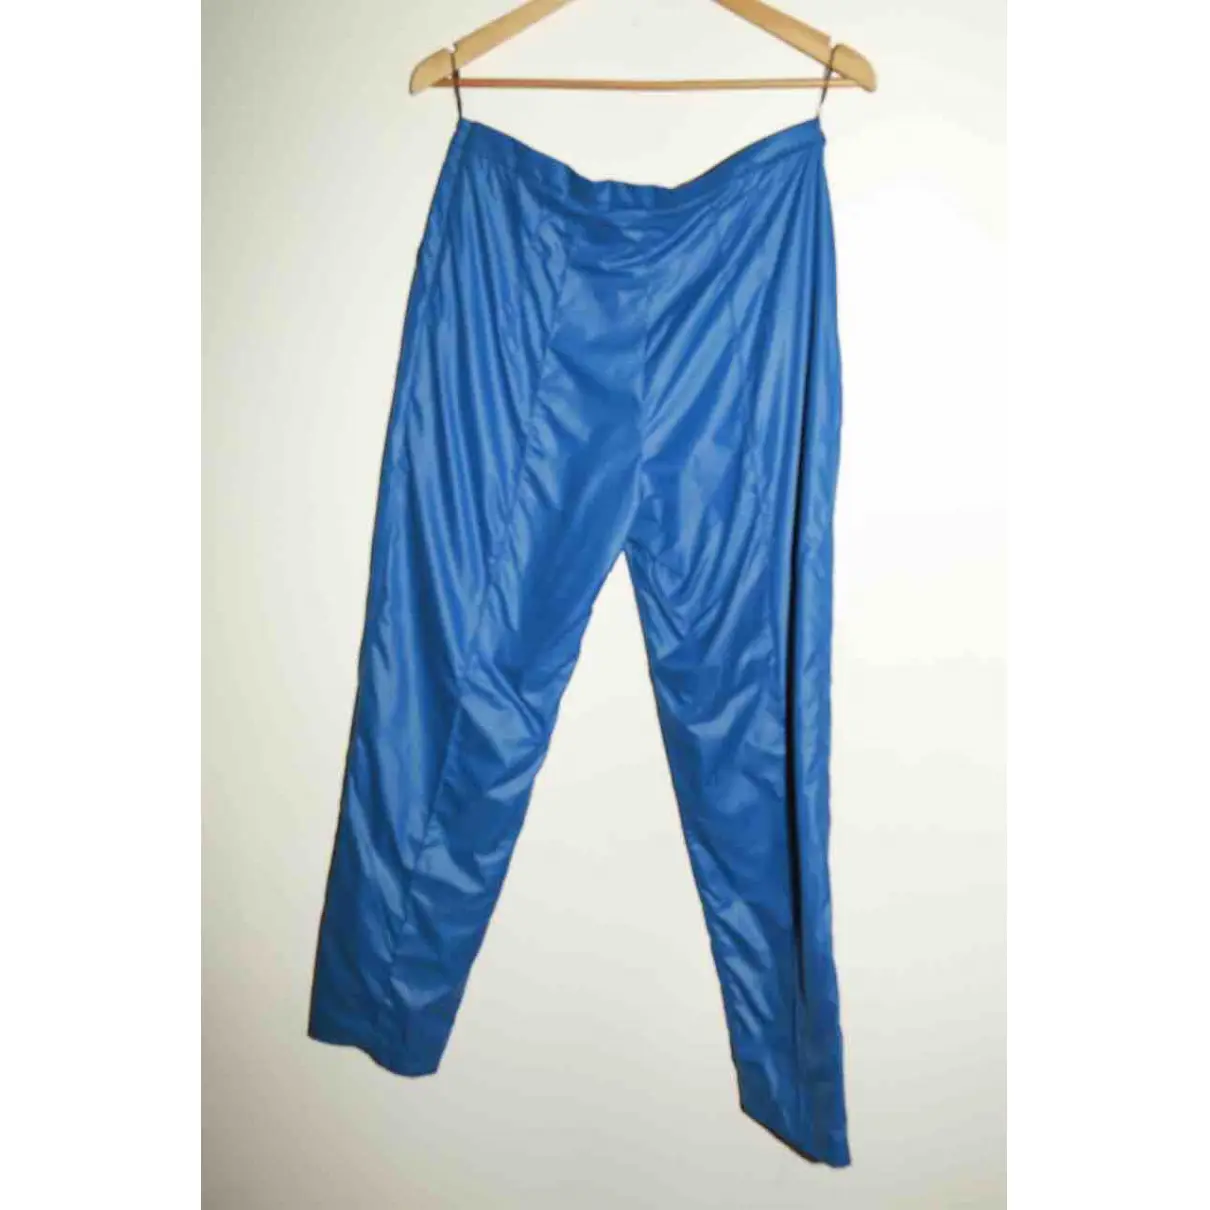 Wanda Nylon Chino pants for sale